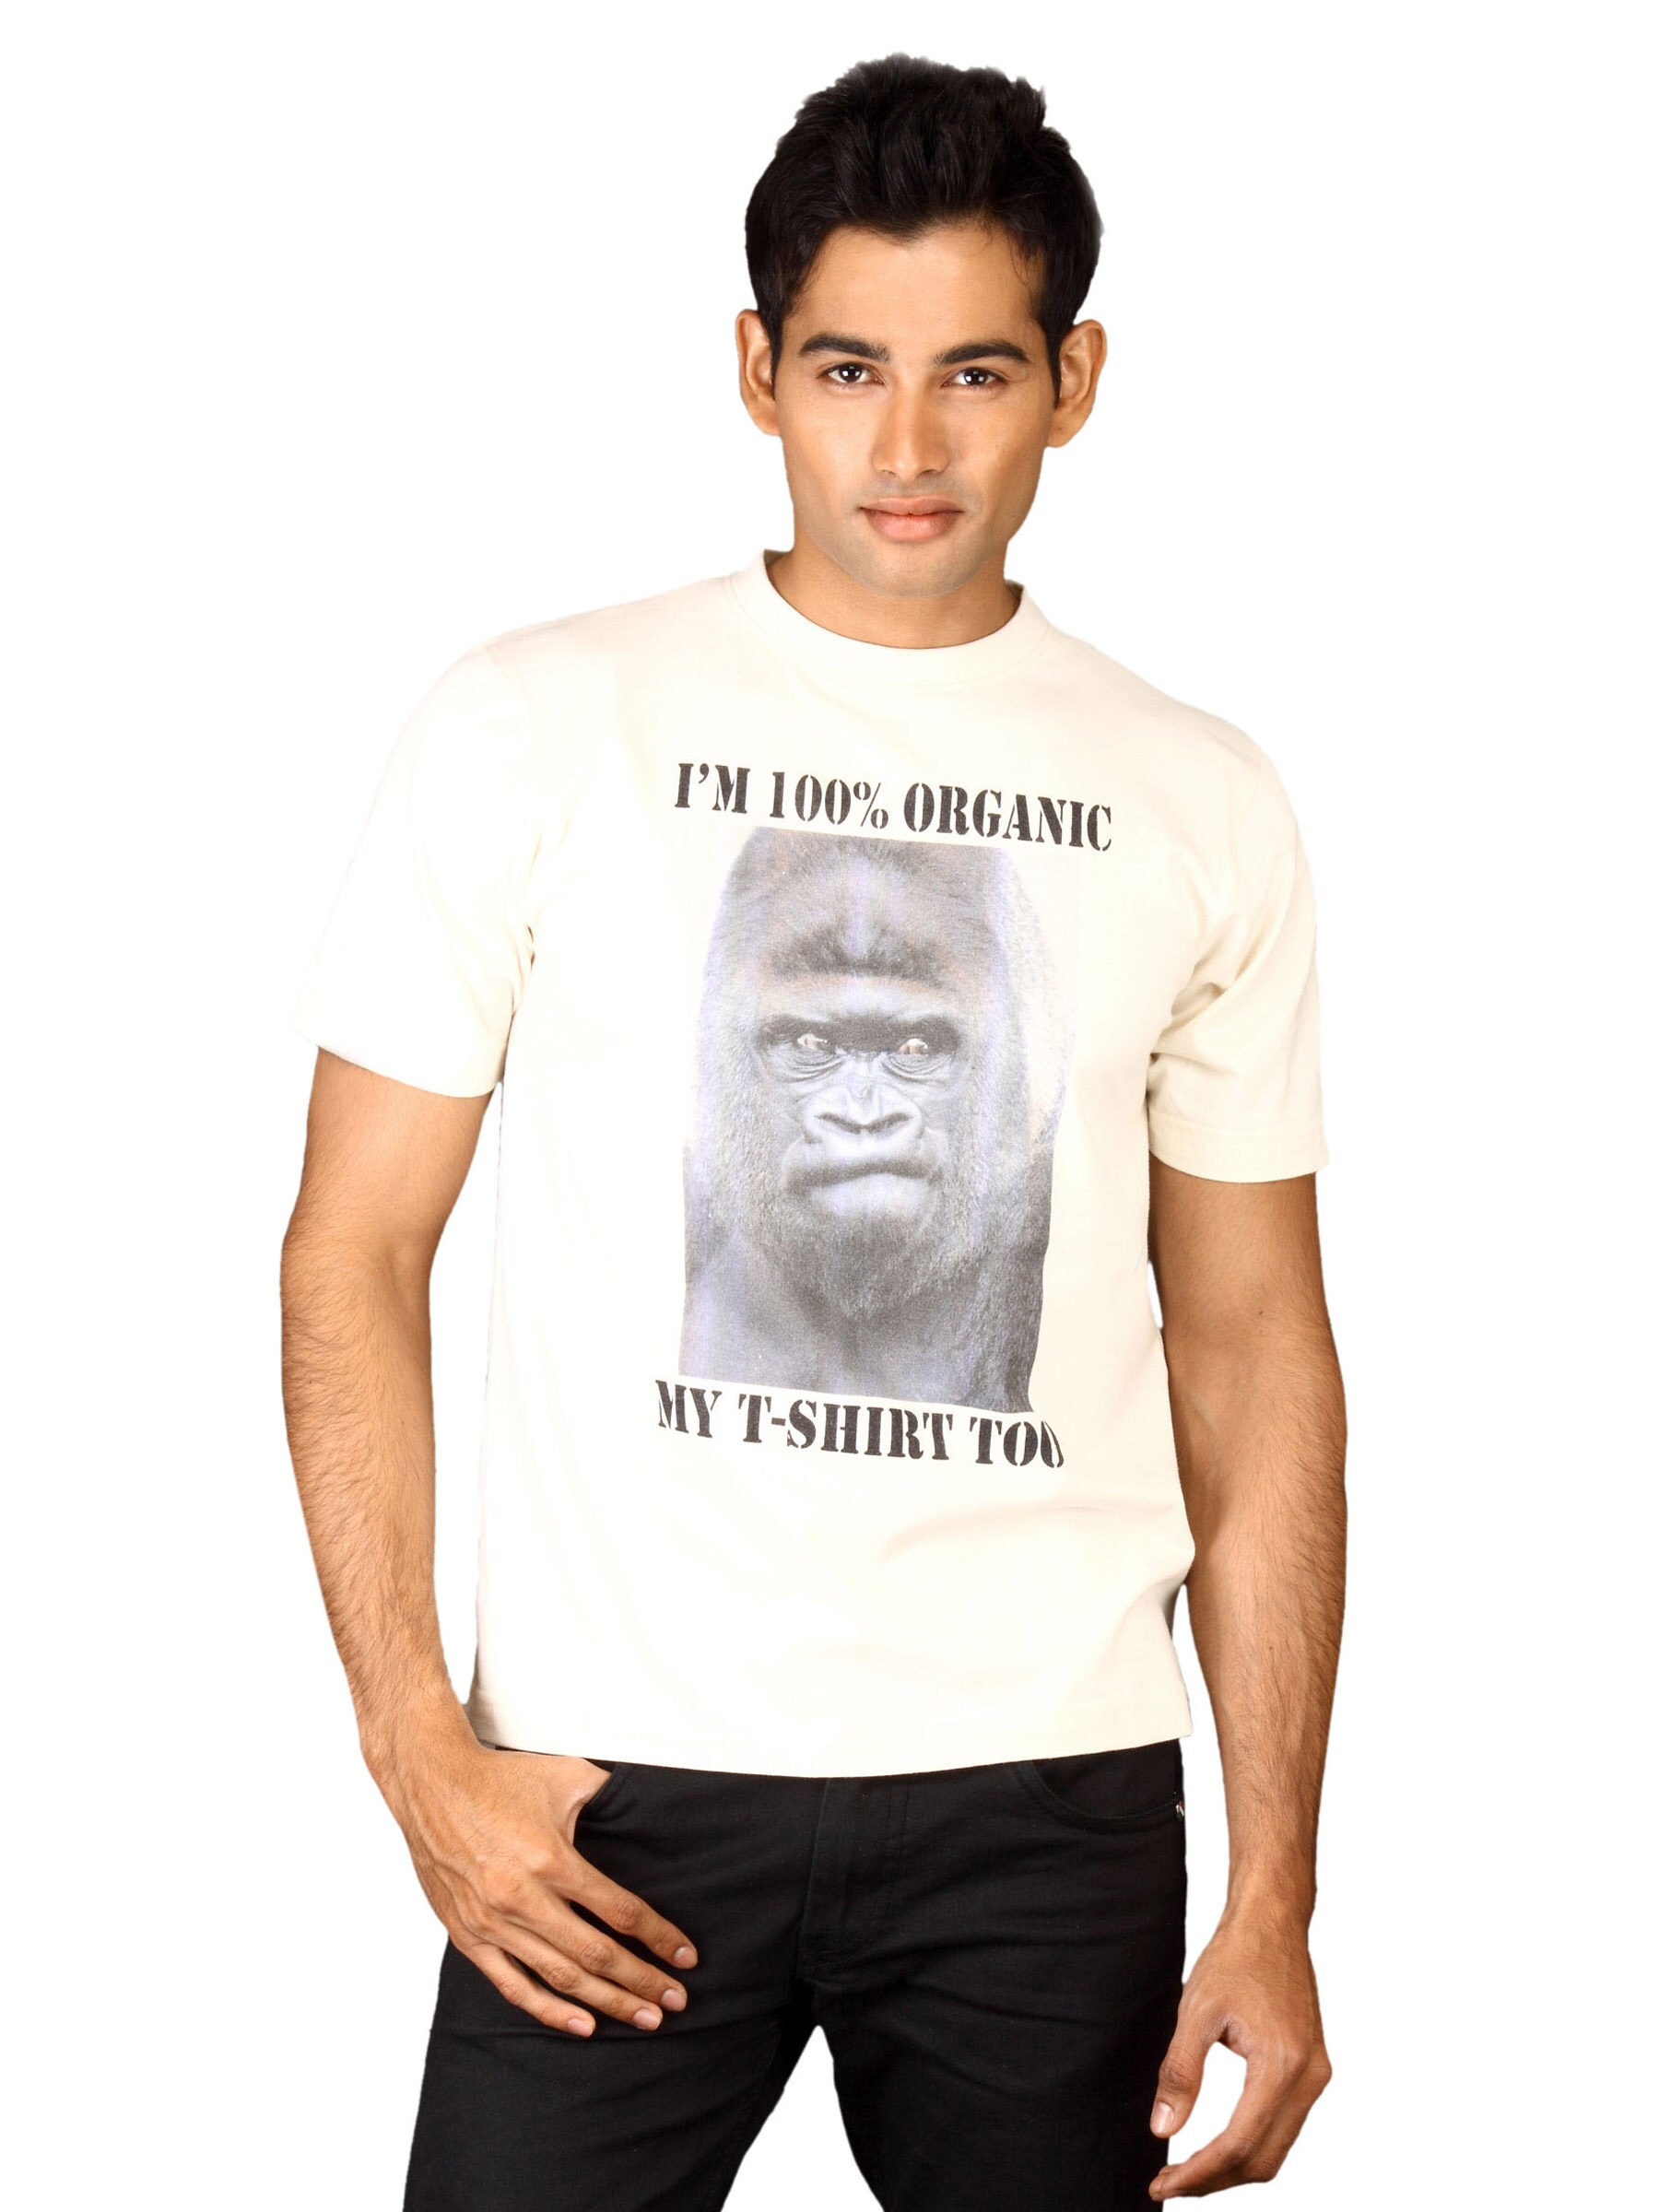 DUSG Men's Gorilla Organic Natural T-shirt